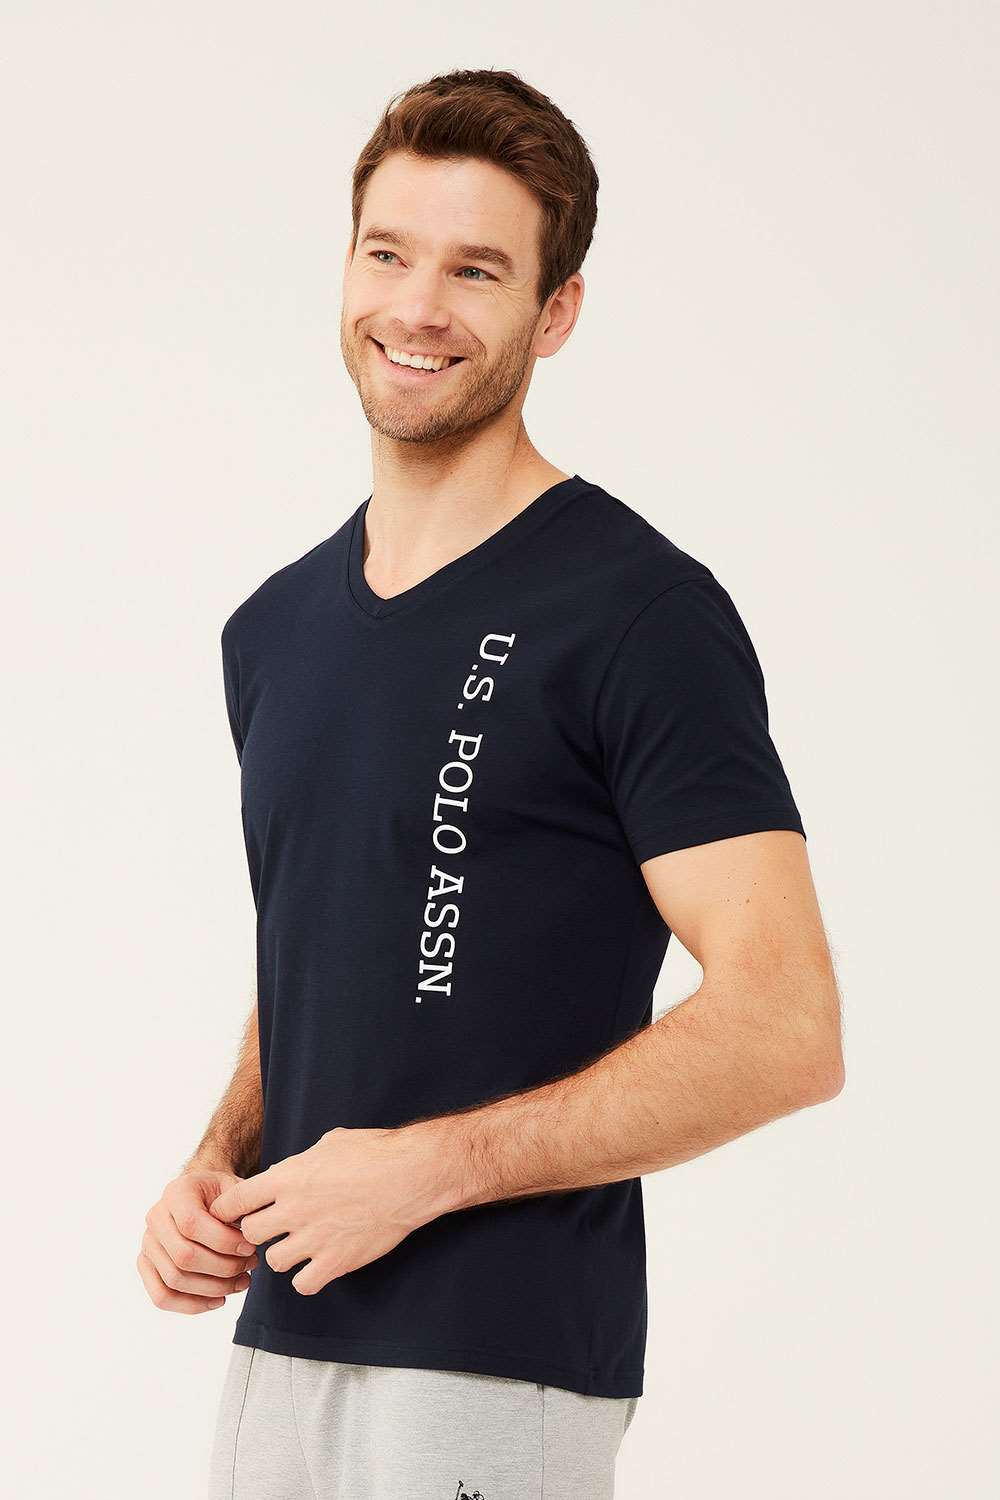 U.S. Polo Assn. Erkek Lacivert V Yaka T-shirt | Modcollection.com.tr